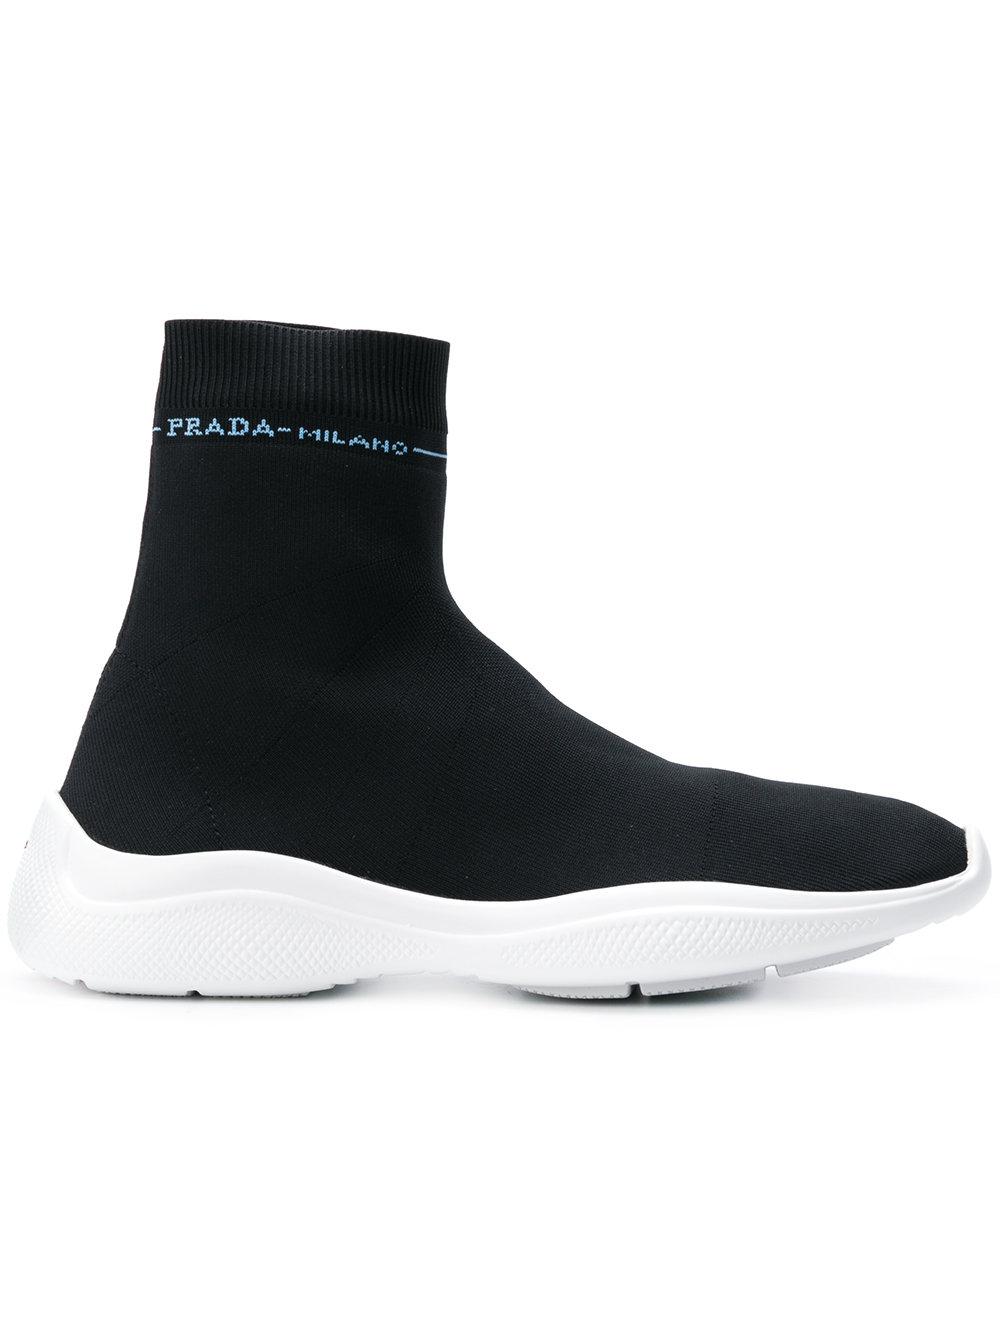 Prada Rubber Sock Sneakers in Black - Lyst